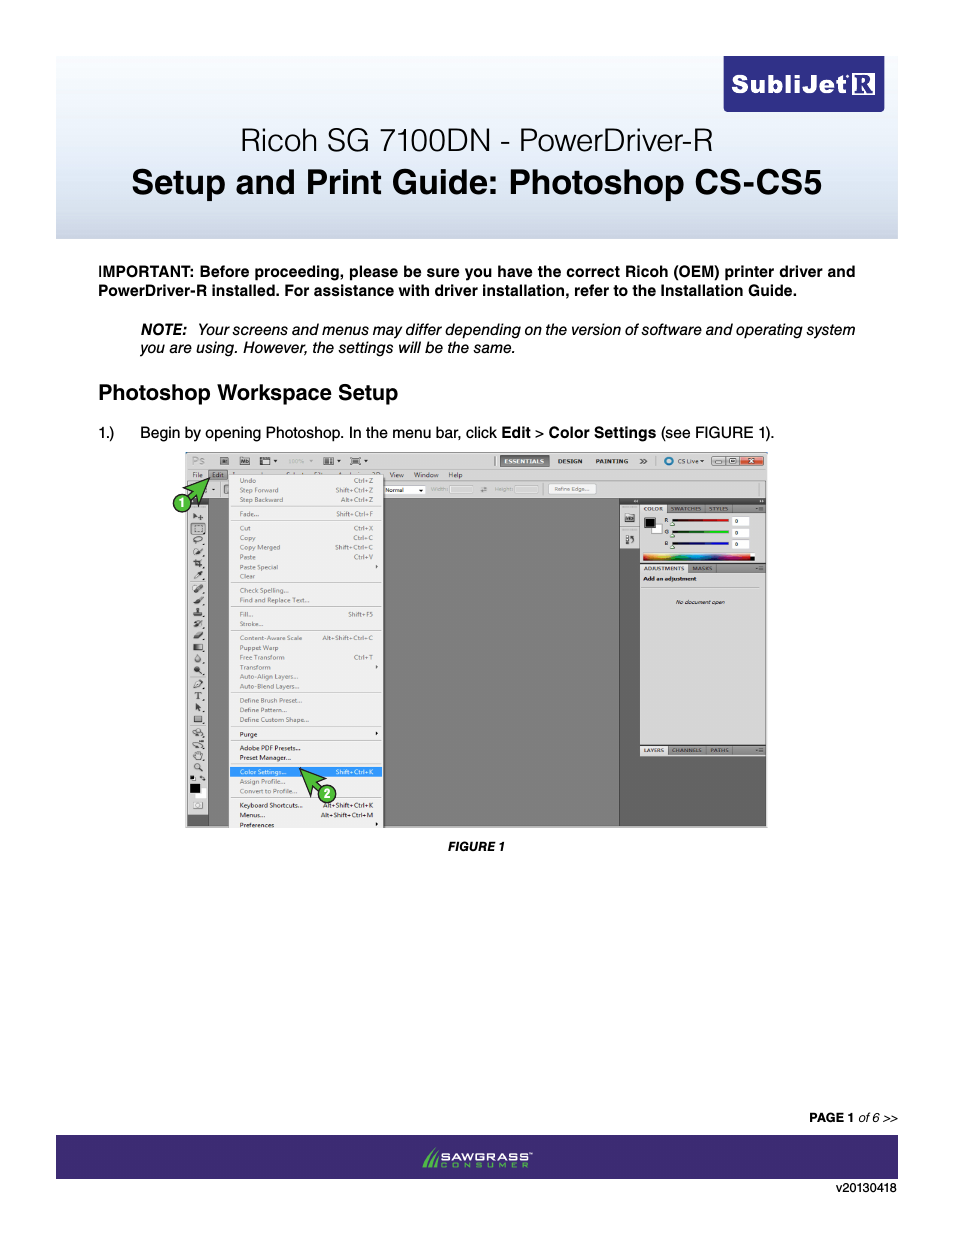 SubliJet R Ricoh SG7100DN (Windows Power Driver Setup): Print & Setup Guide Adobe Photoshop CS - CS5